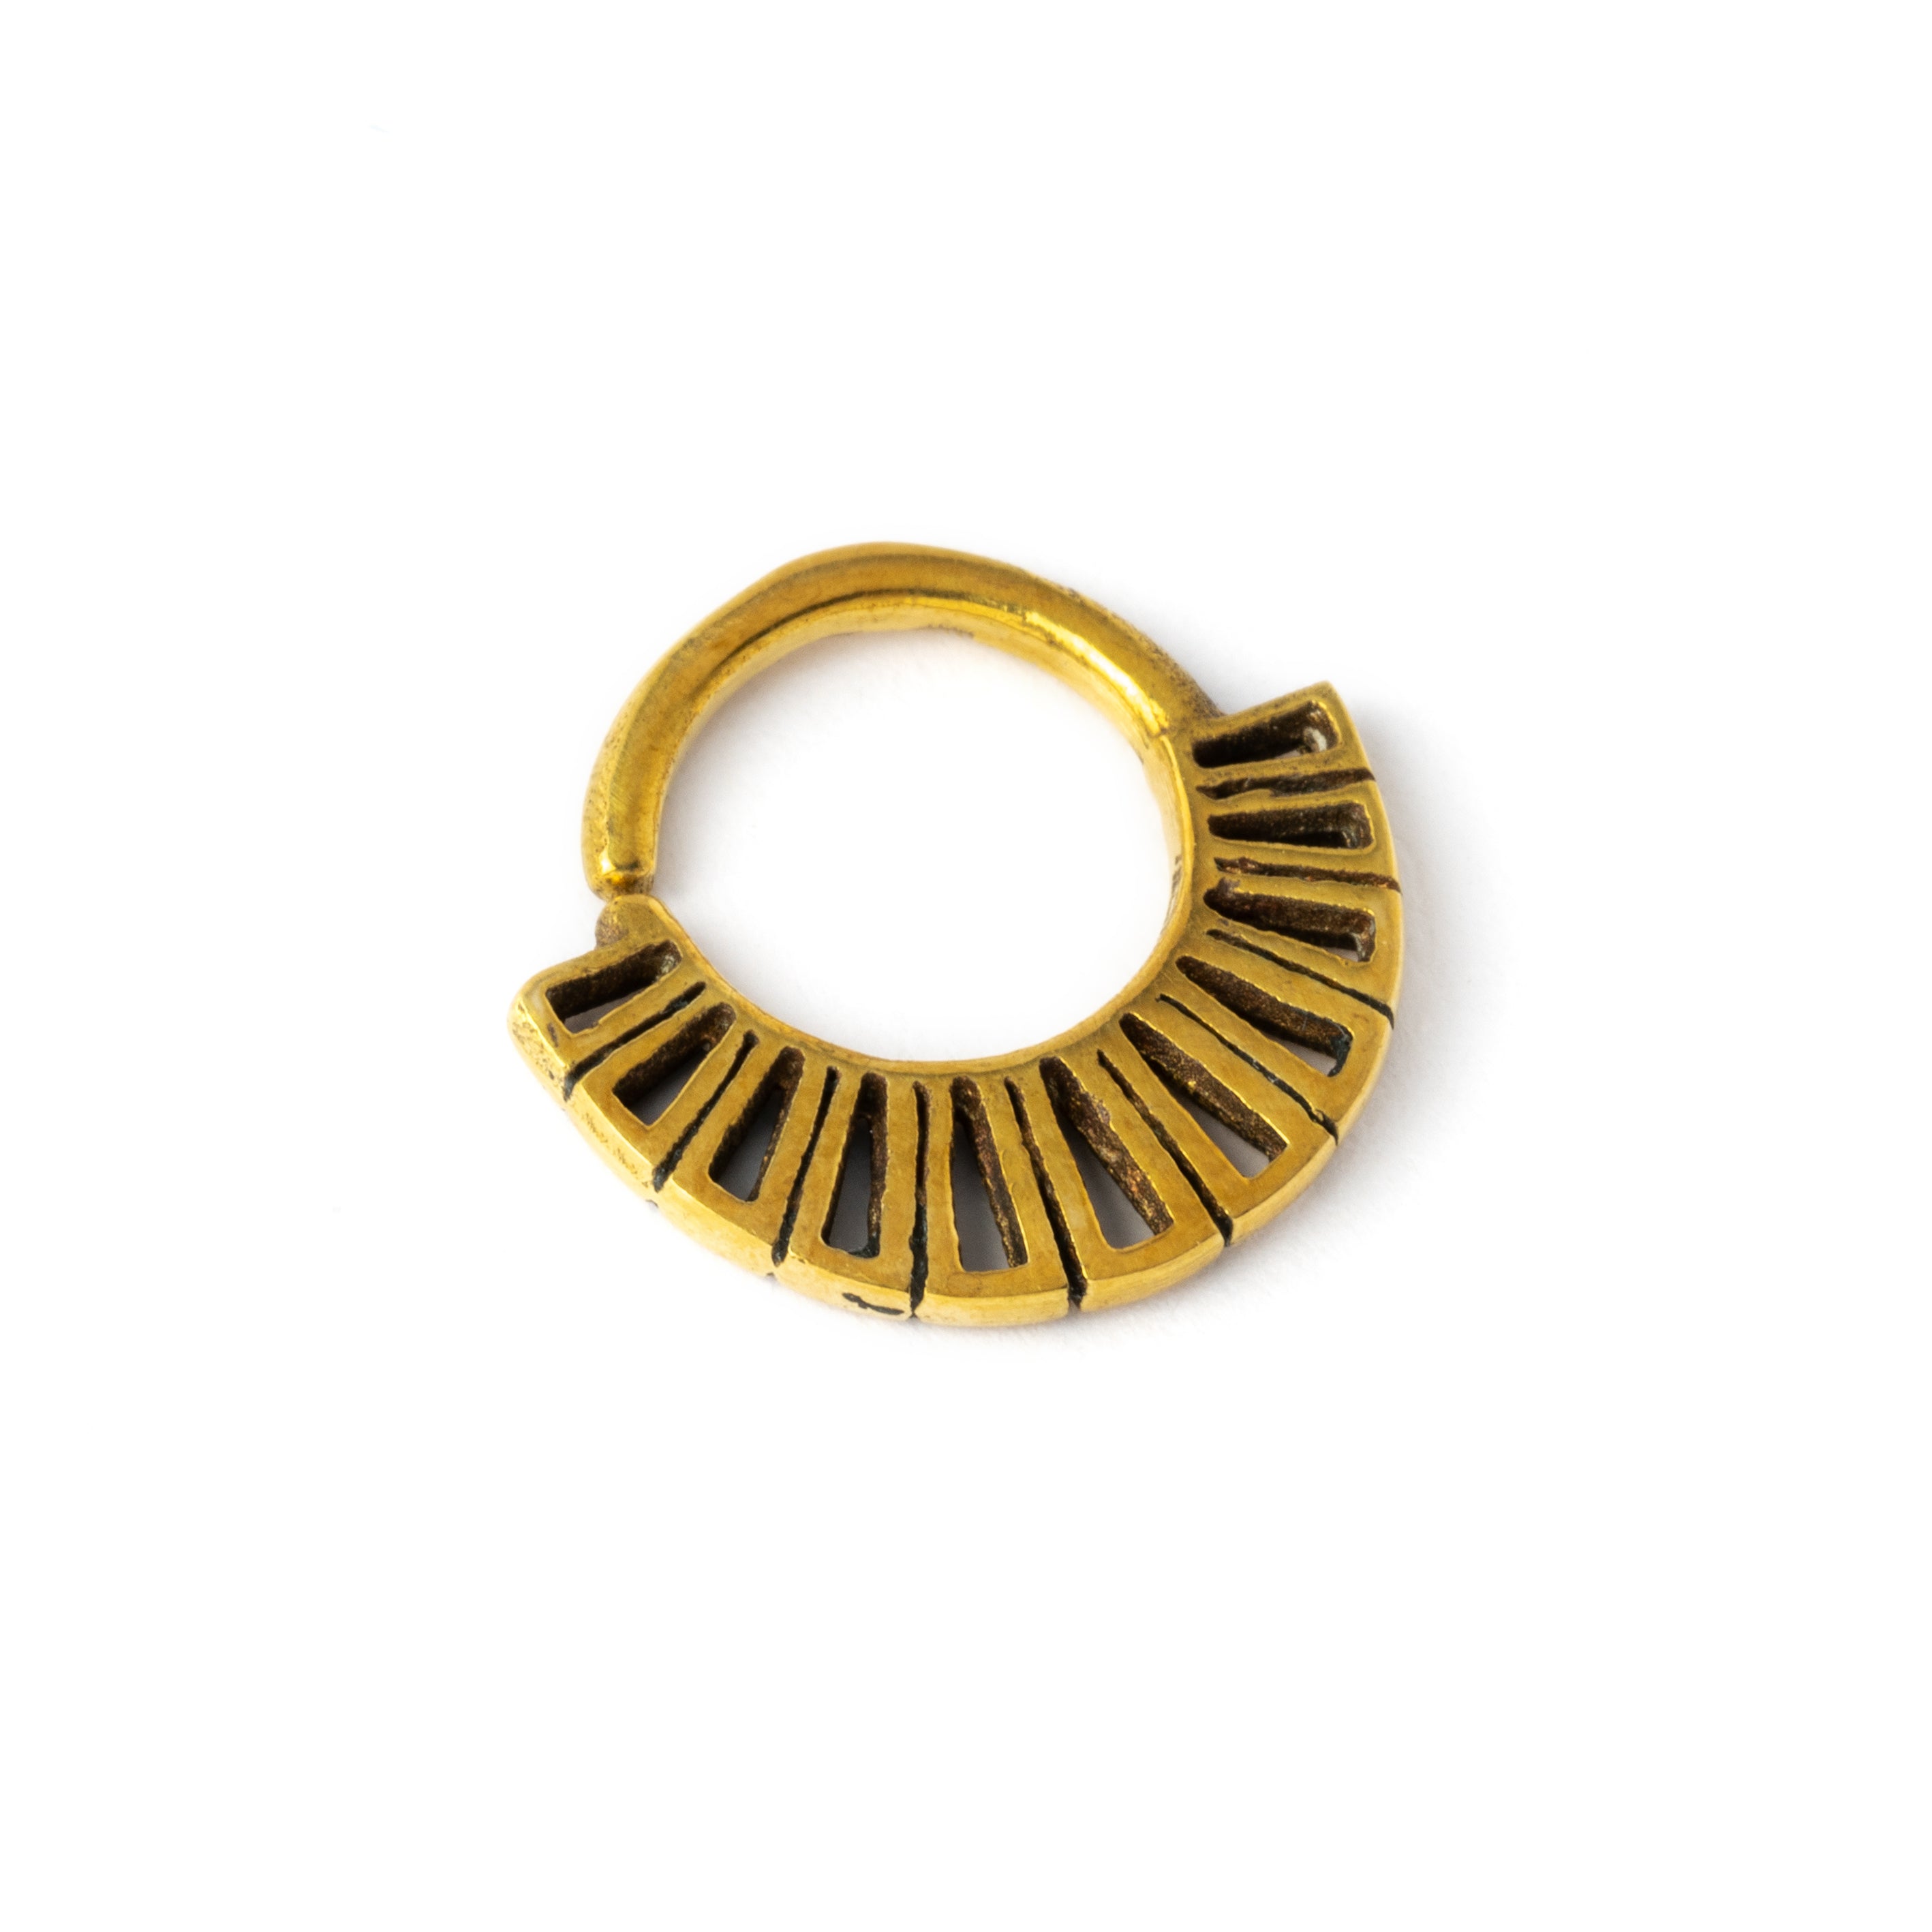 Aditi 18g (1mm) brass tribal geometric septum piercing ring right side view